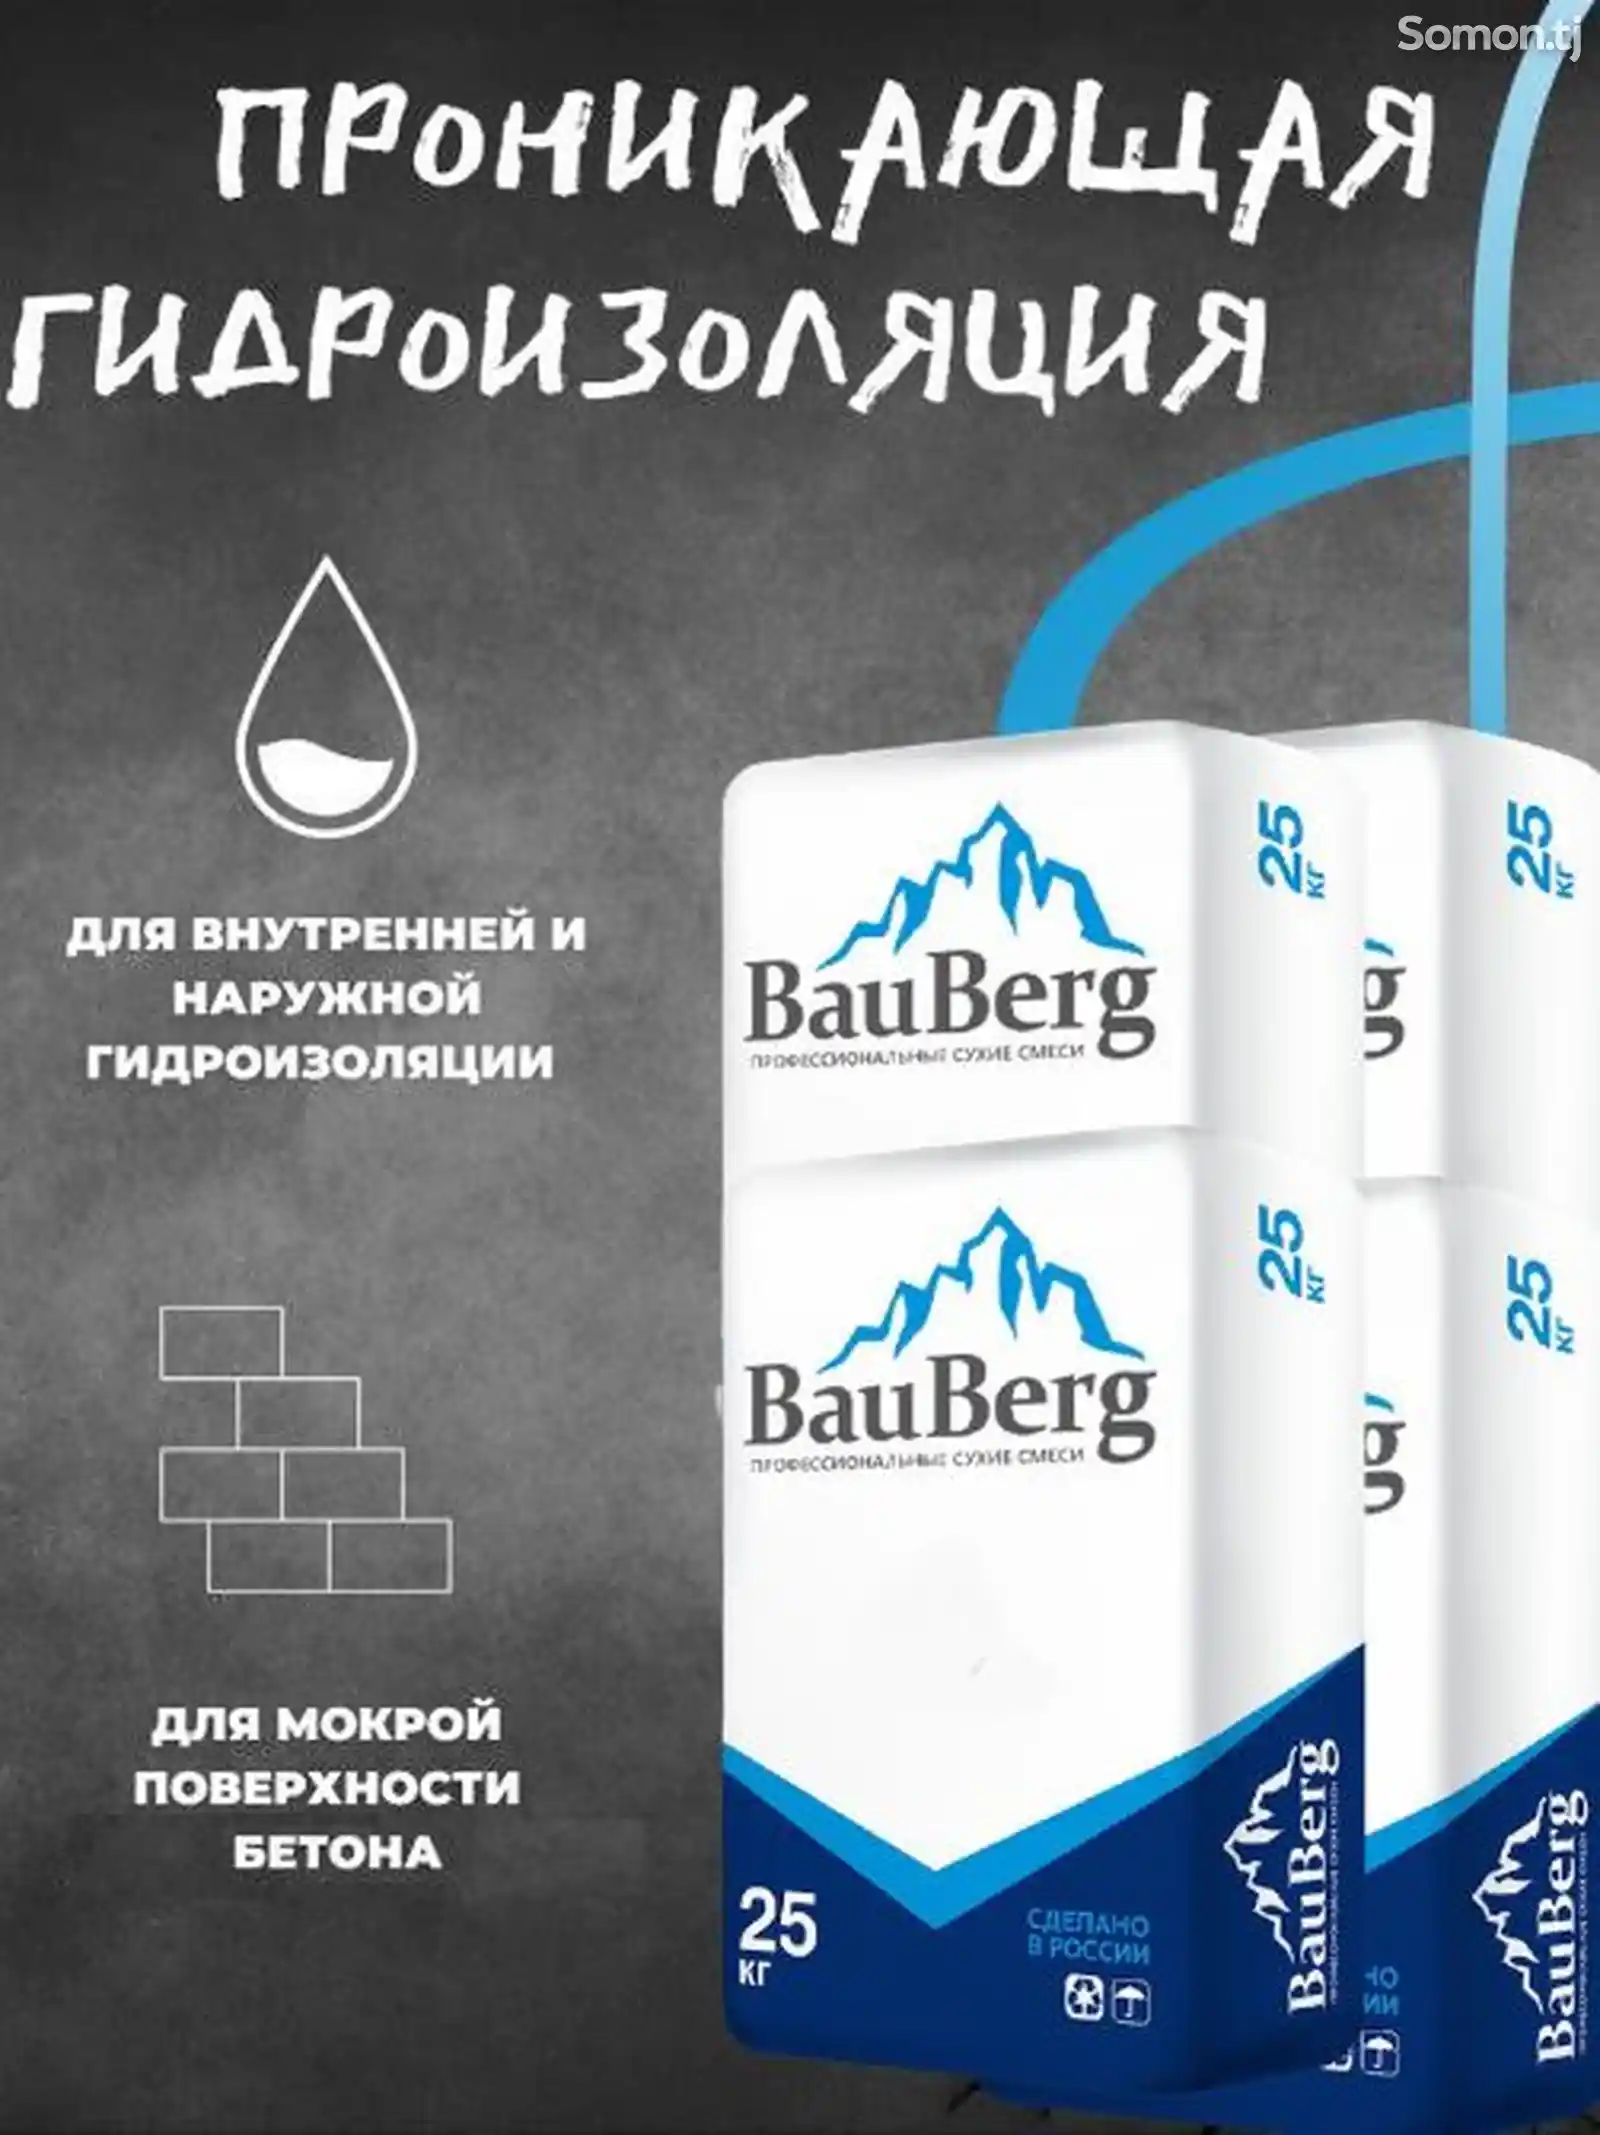 Проникающая гидроизоляция Bauberg-5